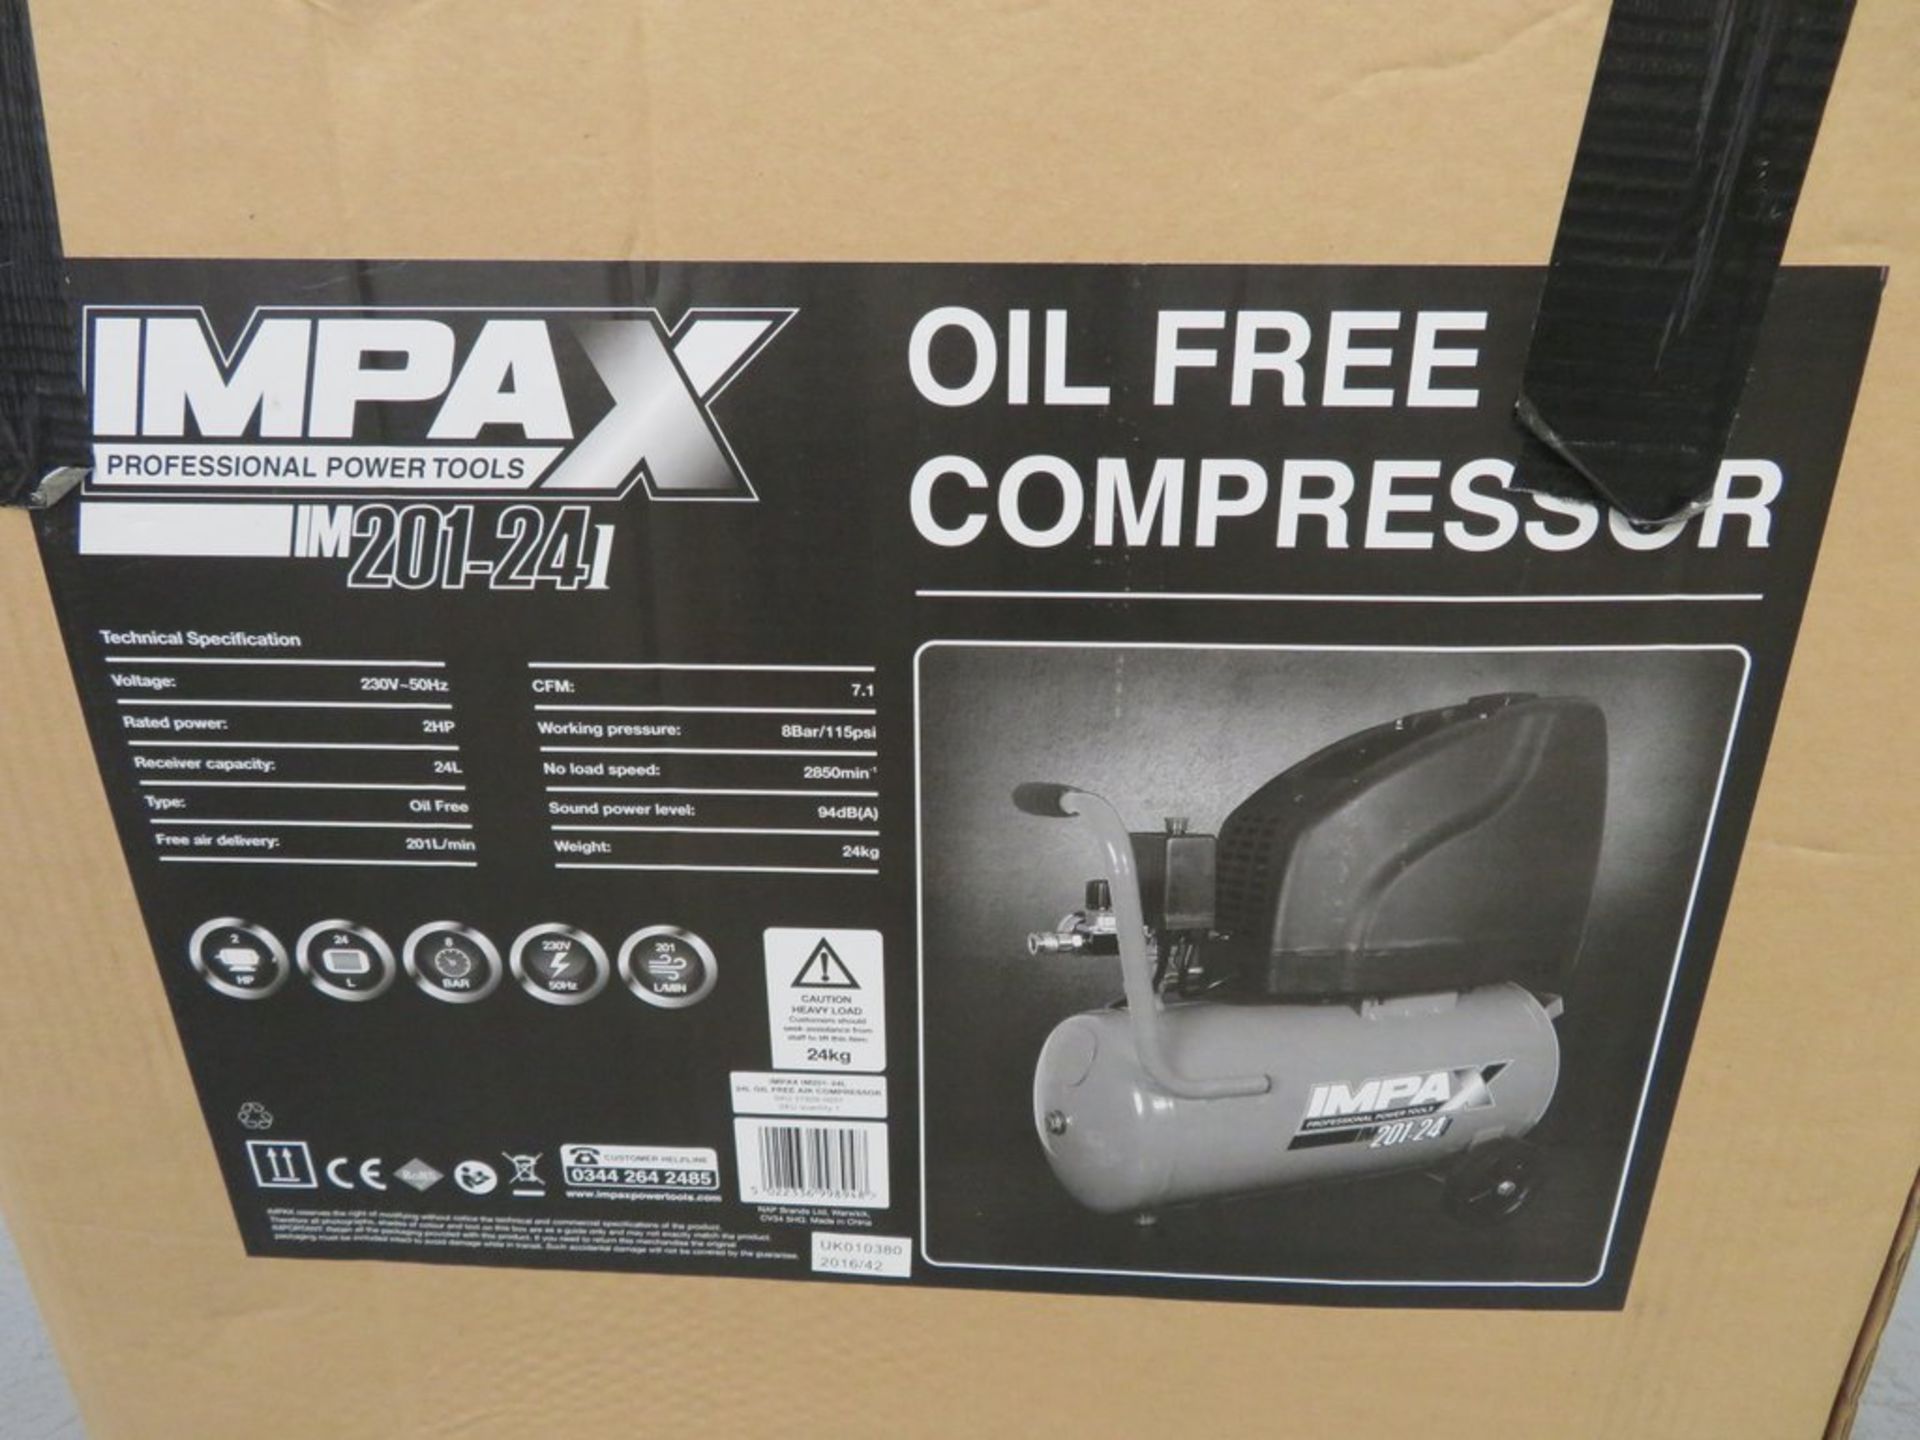 Impax 24 Litre Electrical Air Compressor. Model: IM201-24L. Oil Free. 230v. - Image 9 of 11